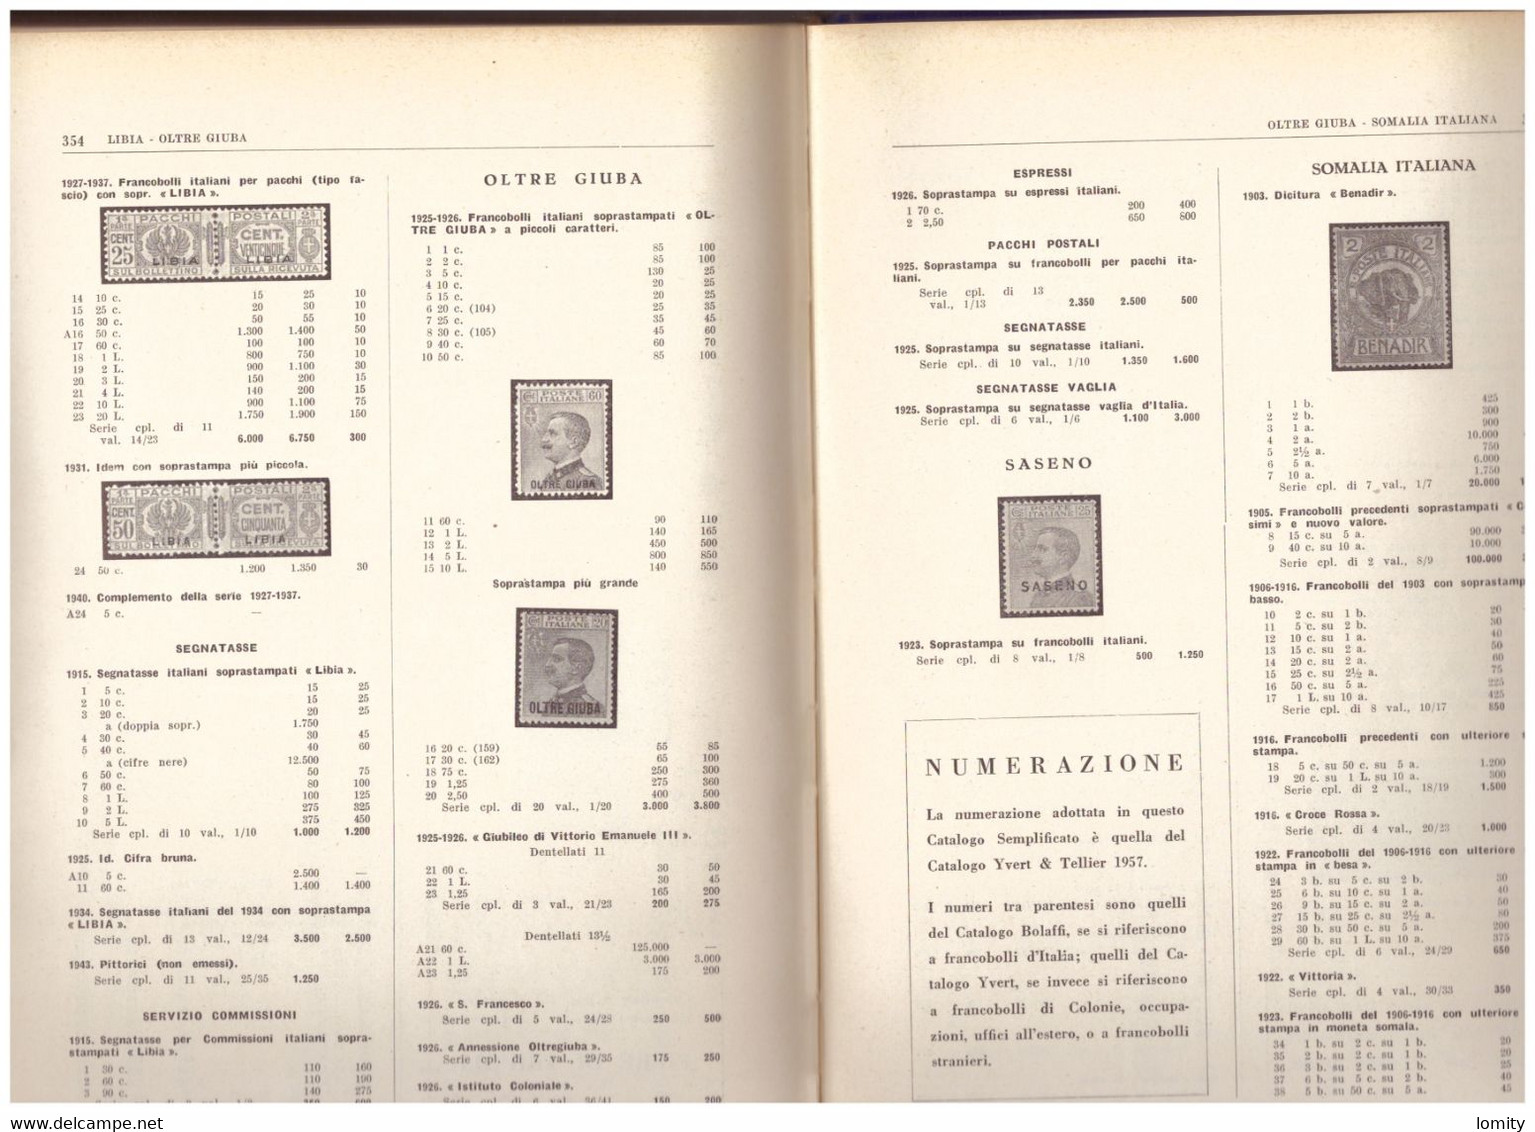 Catalogue Italie Bolaffi 1957 Catalogo Dei Francobelli Italiani 372 Pages - Italy